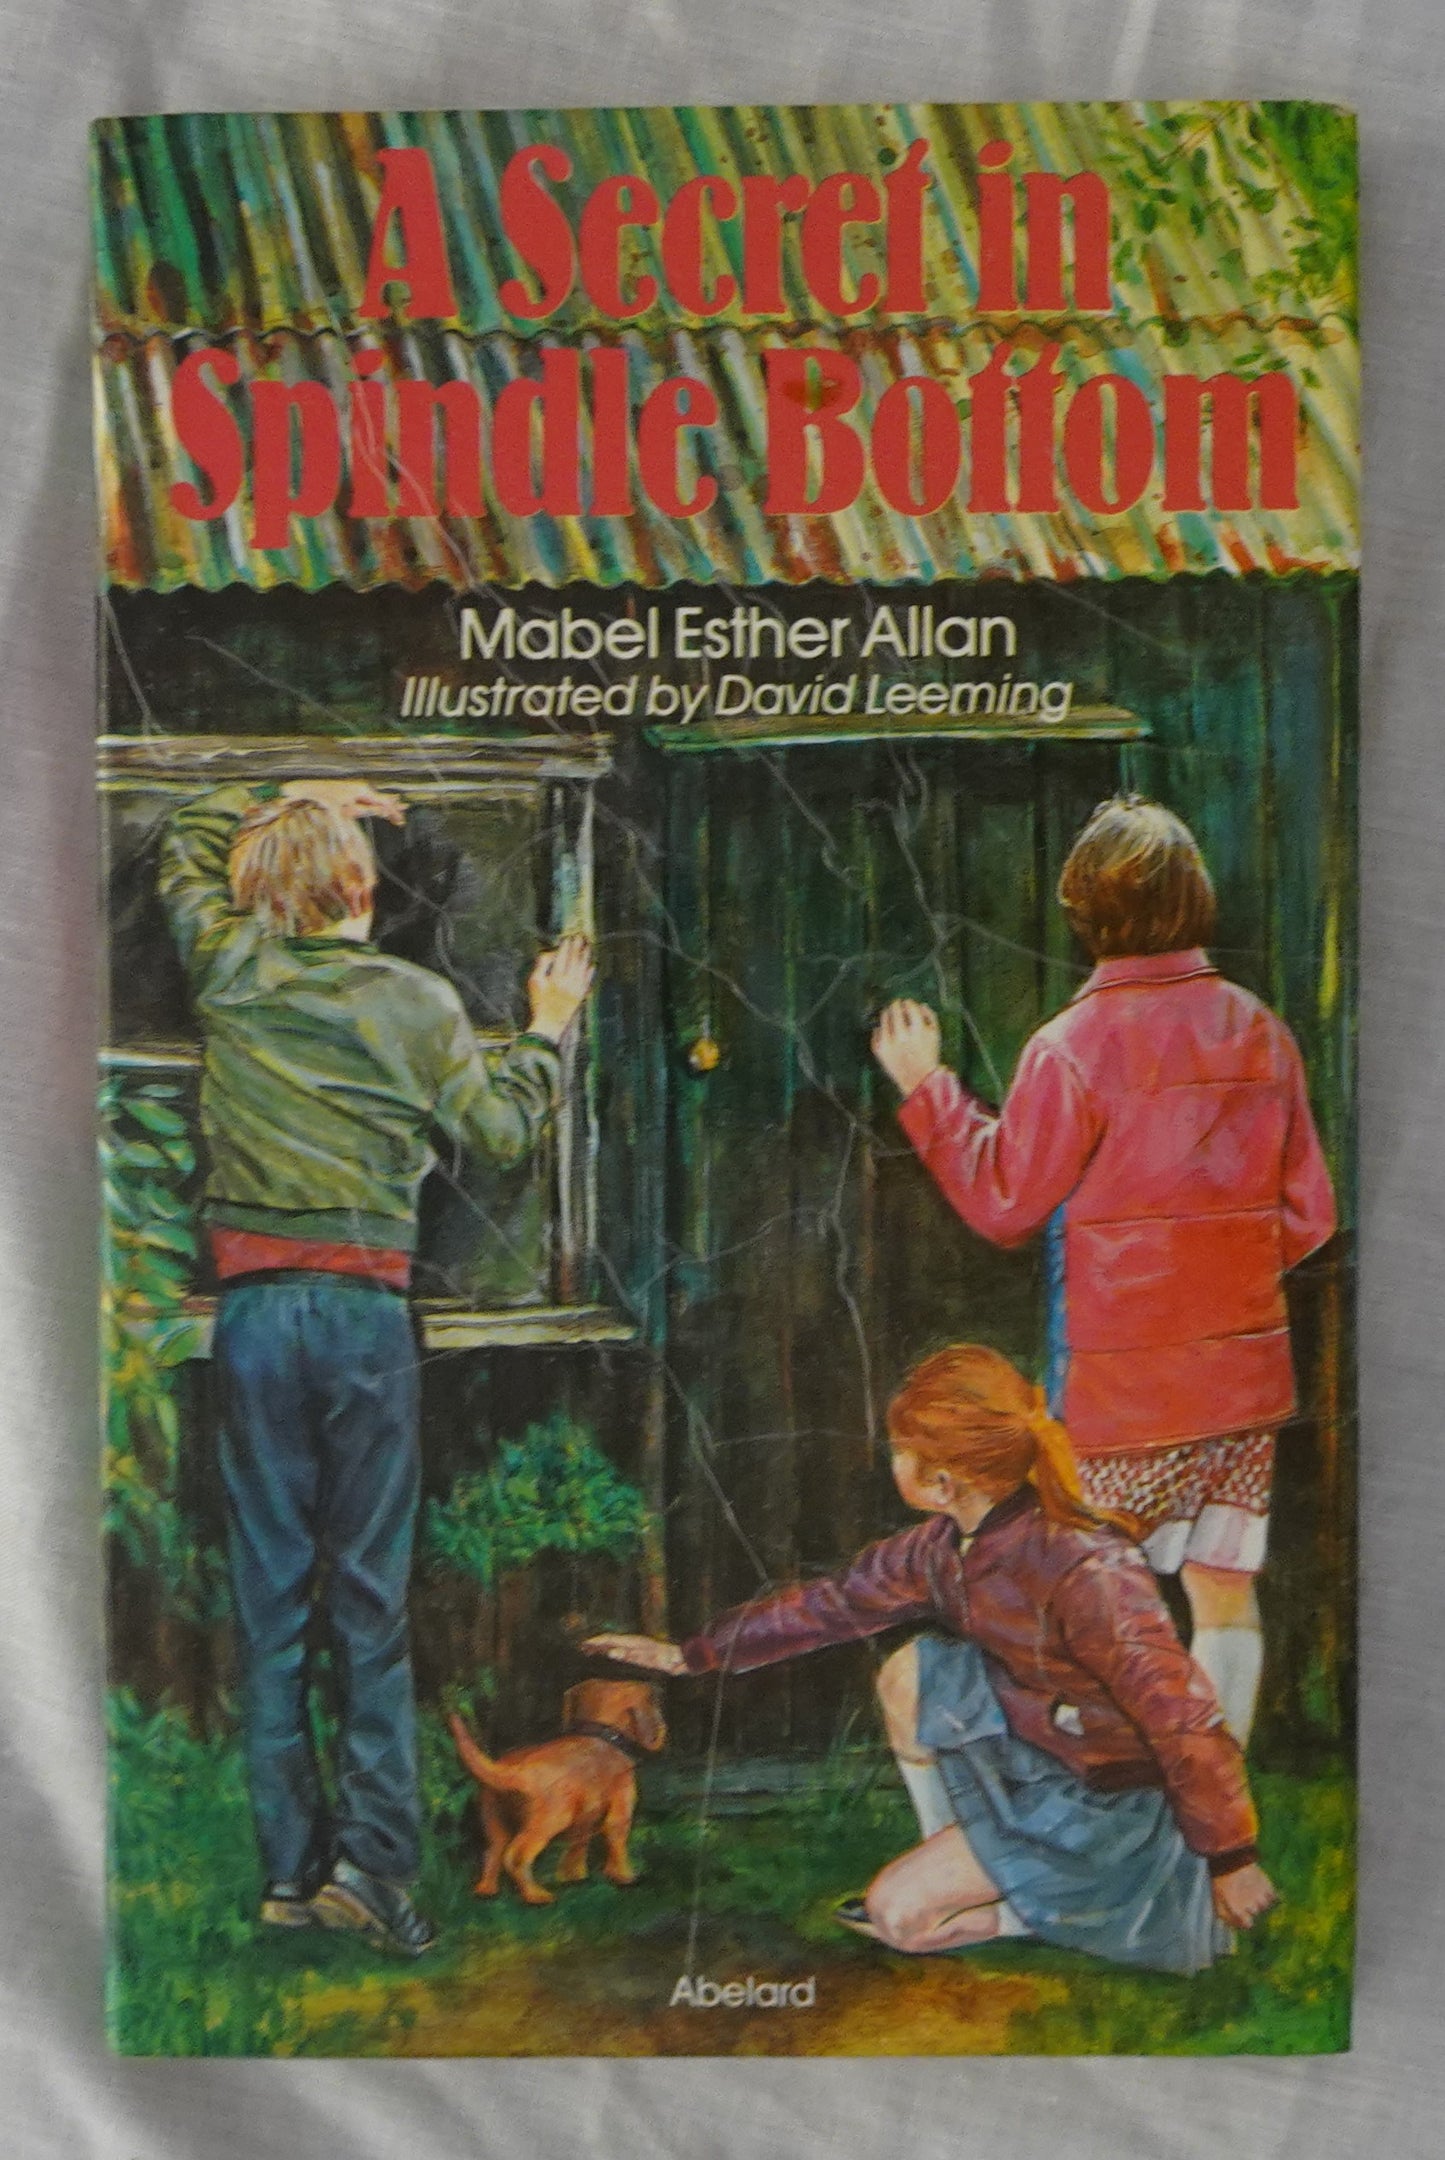 A Secret in Spindle Bottom! by Mabel Esther Allan